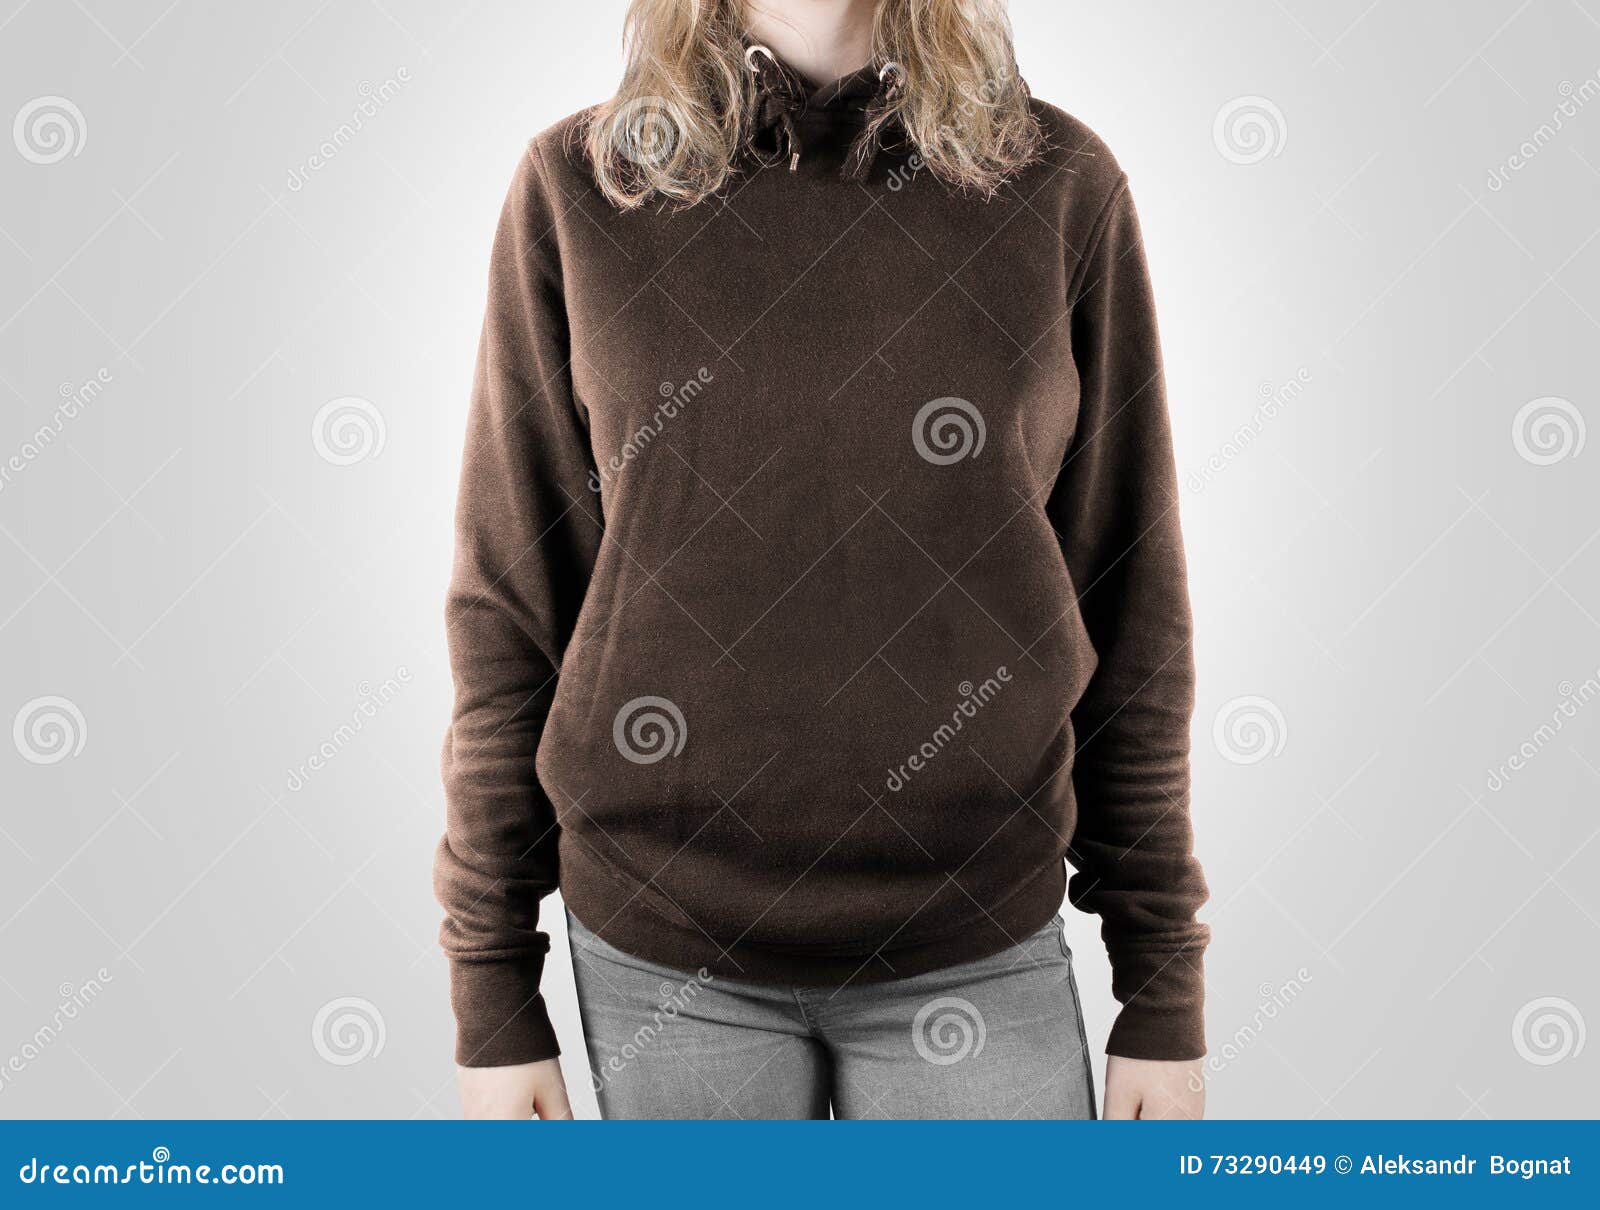 Download Blank Brown Sweatshirt Mock Up . Stock Image - Image of ...